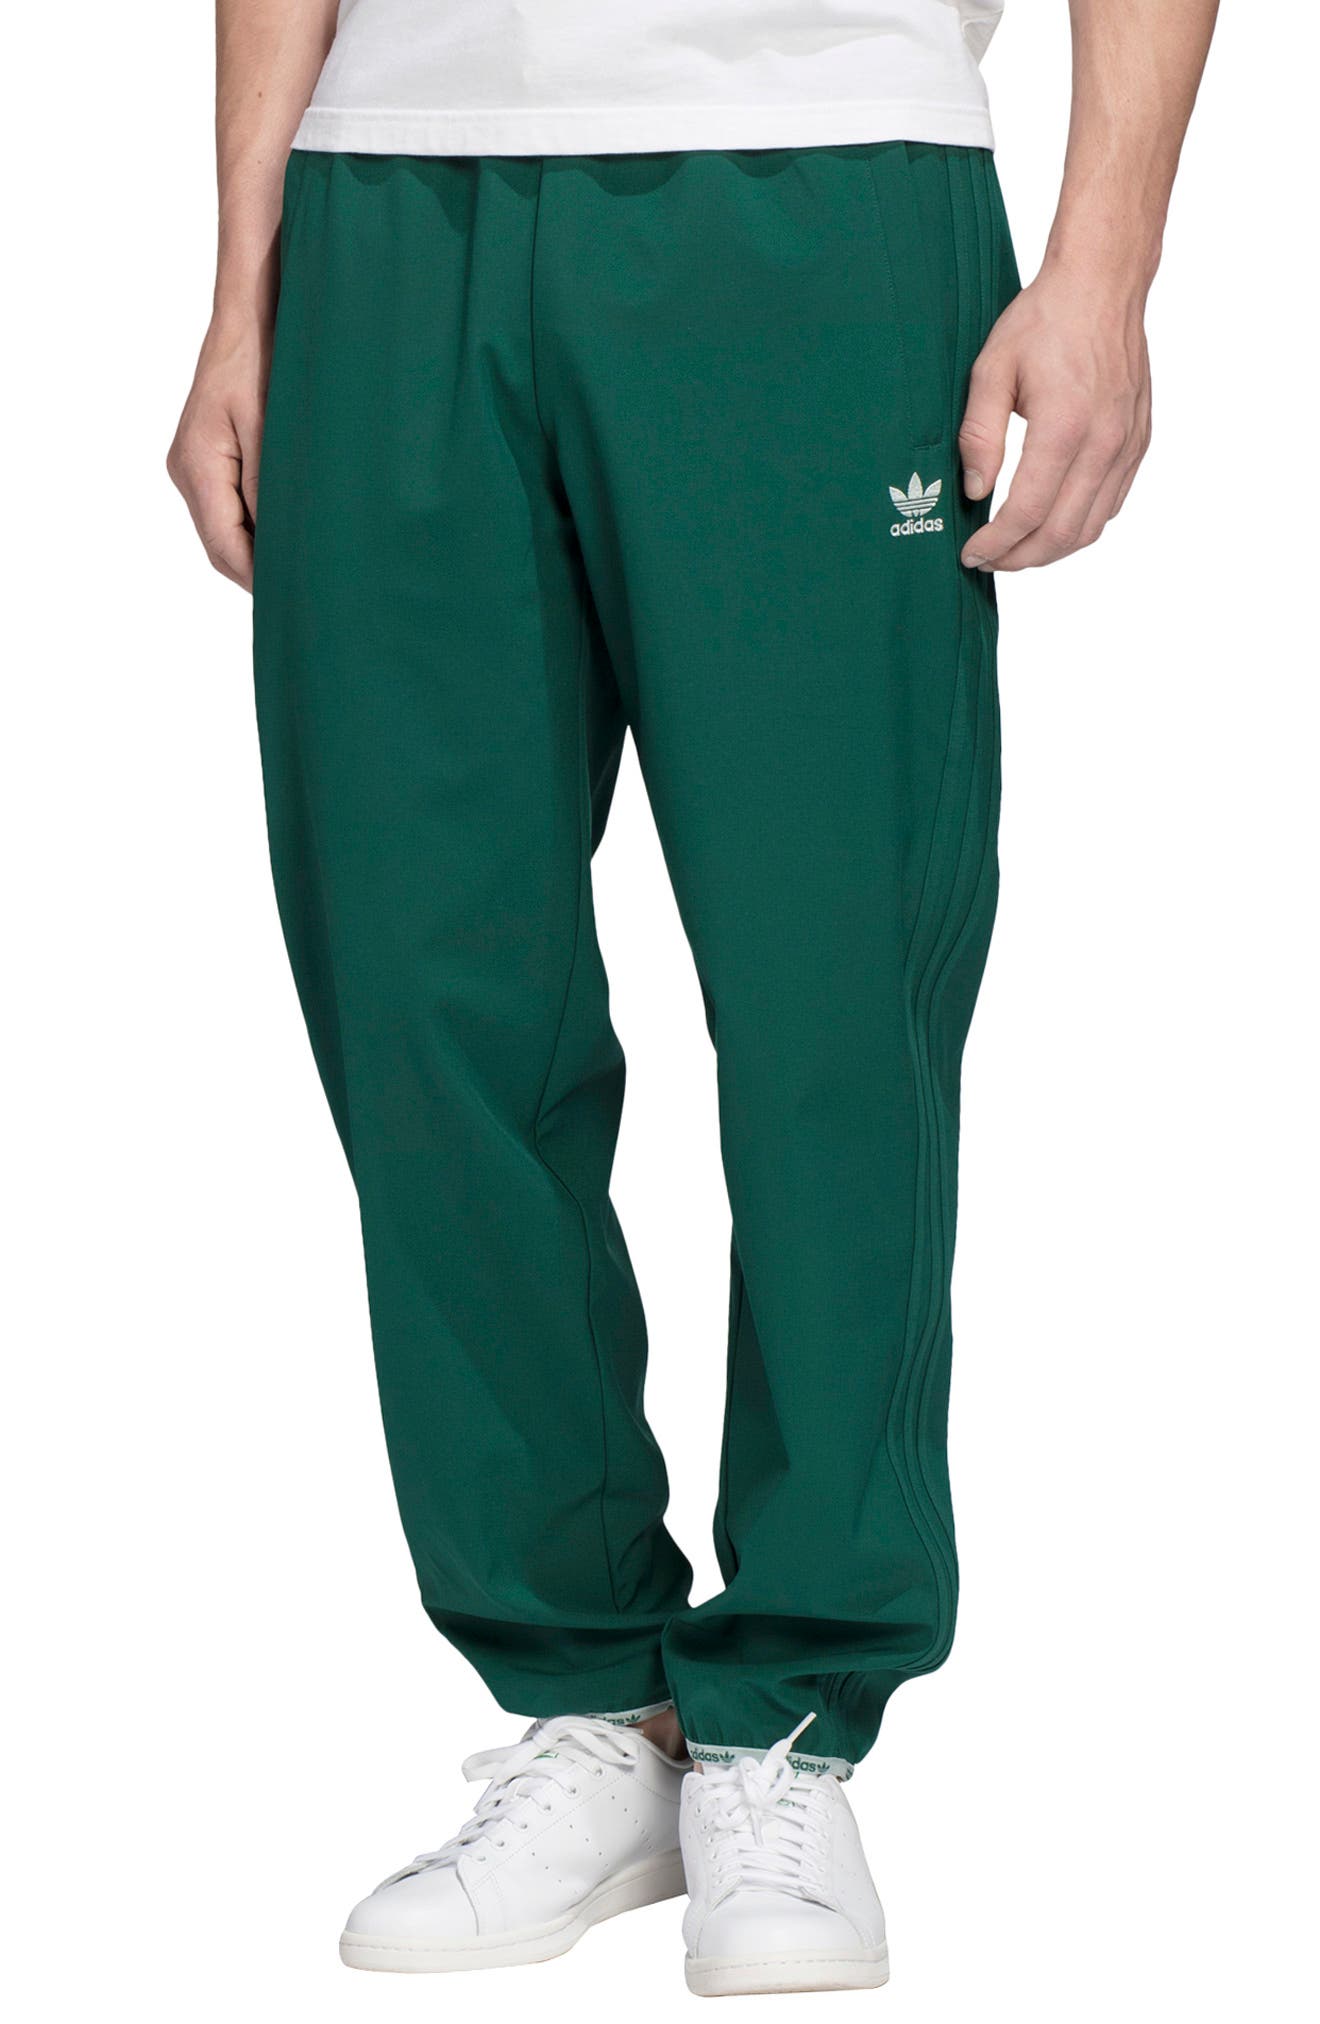 adidas collegiate green pants